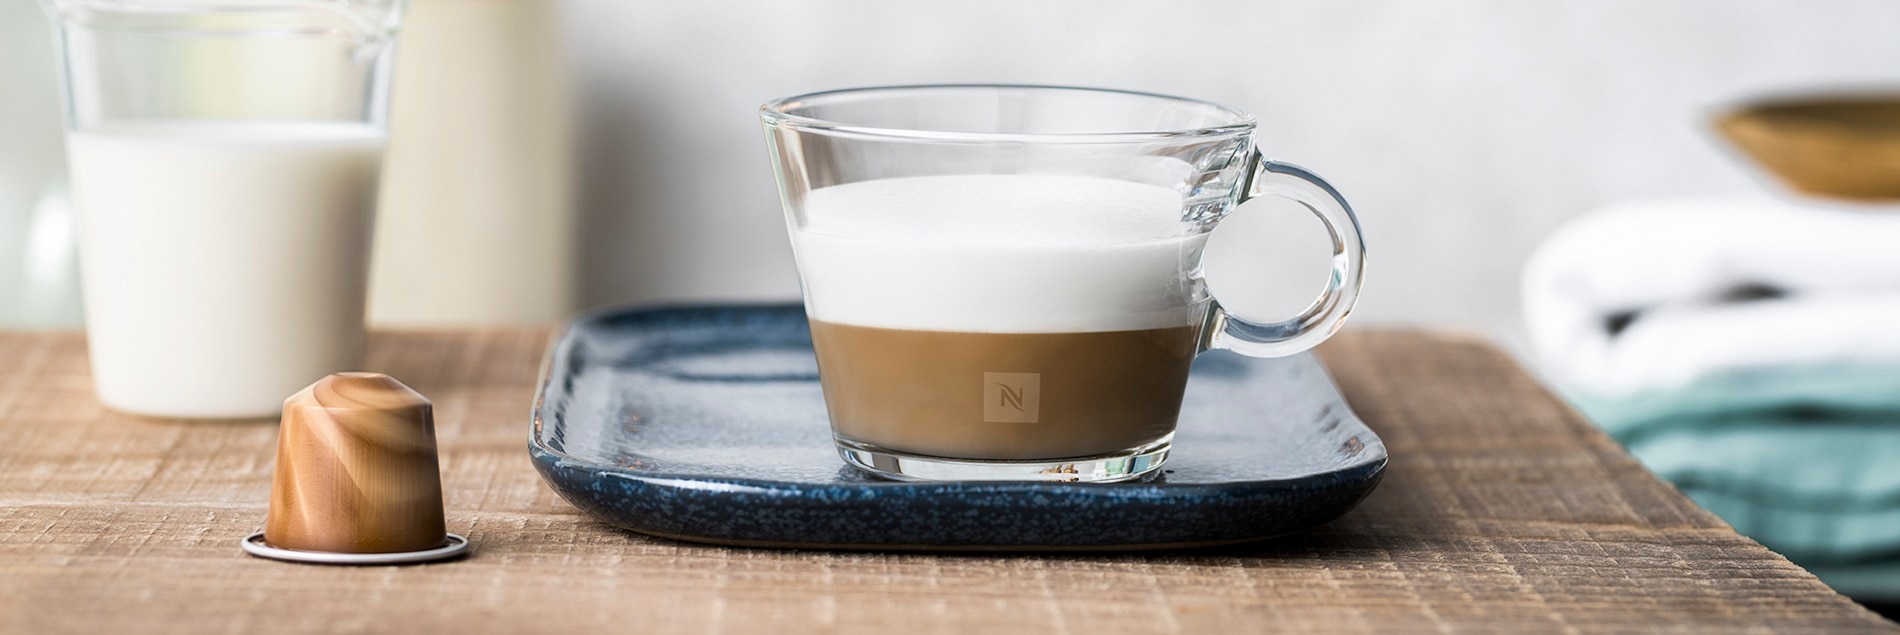 ✅️ Cómo preparar un cappuccino ☕️ con cafetera NESPRESSO 😋 